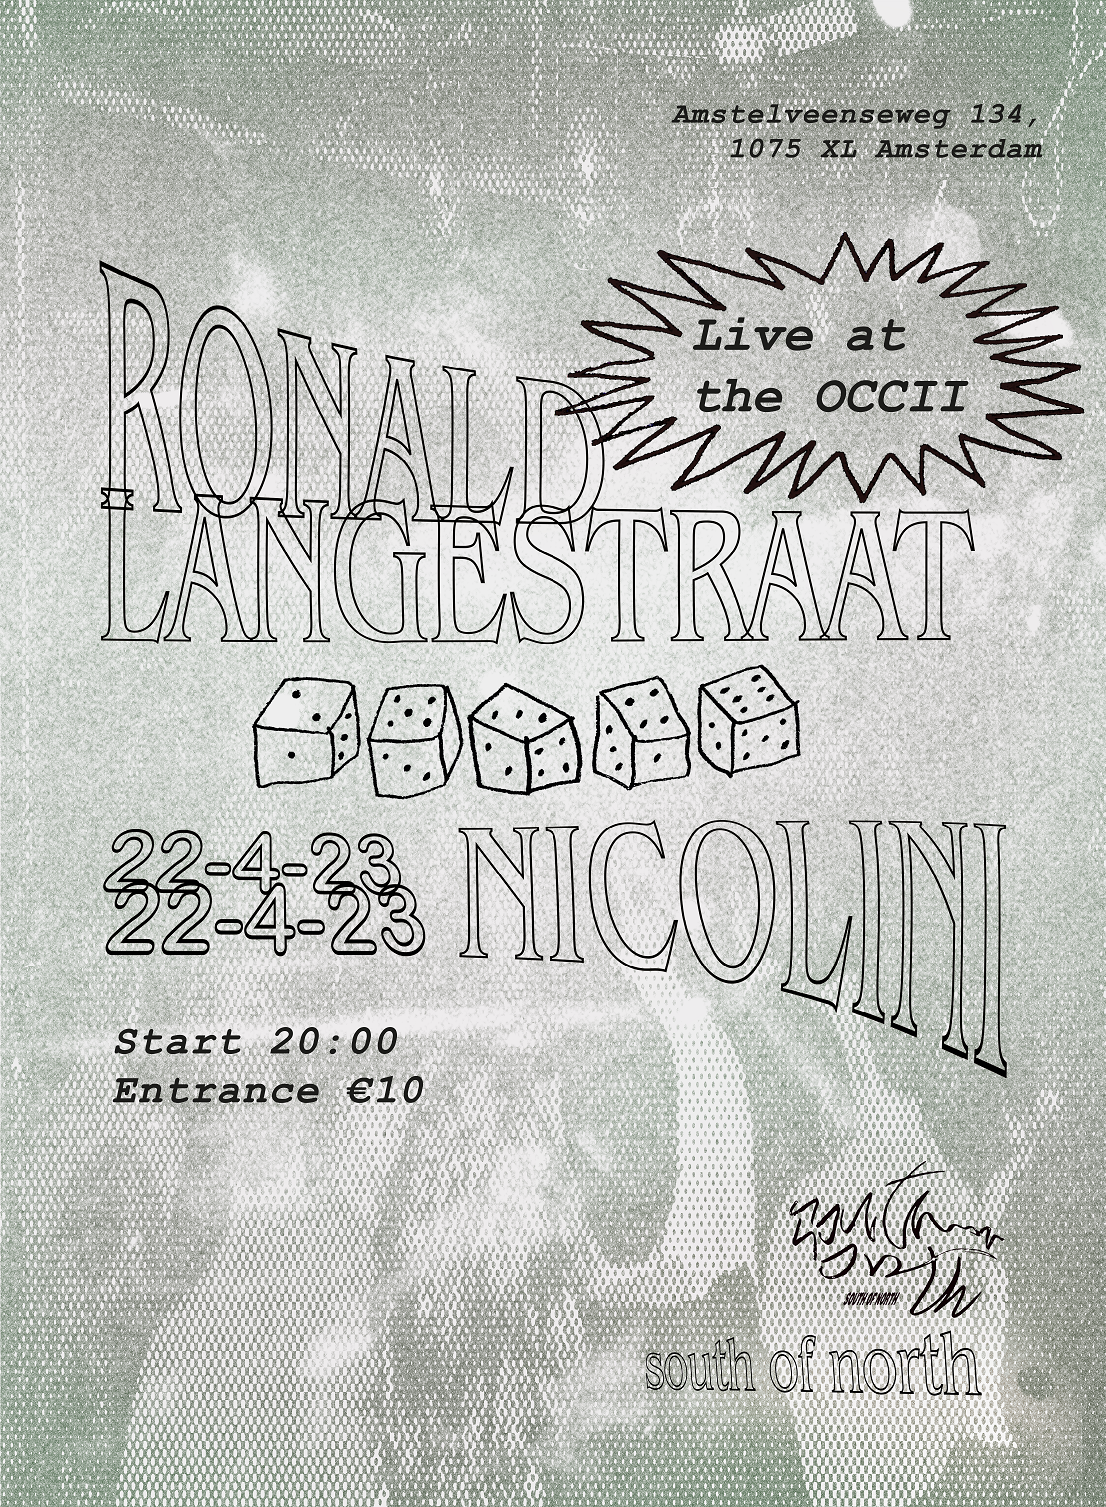 RONALD LANGESTRAAT & BAND + NICOLINI (LIVE)